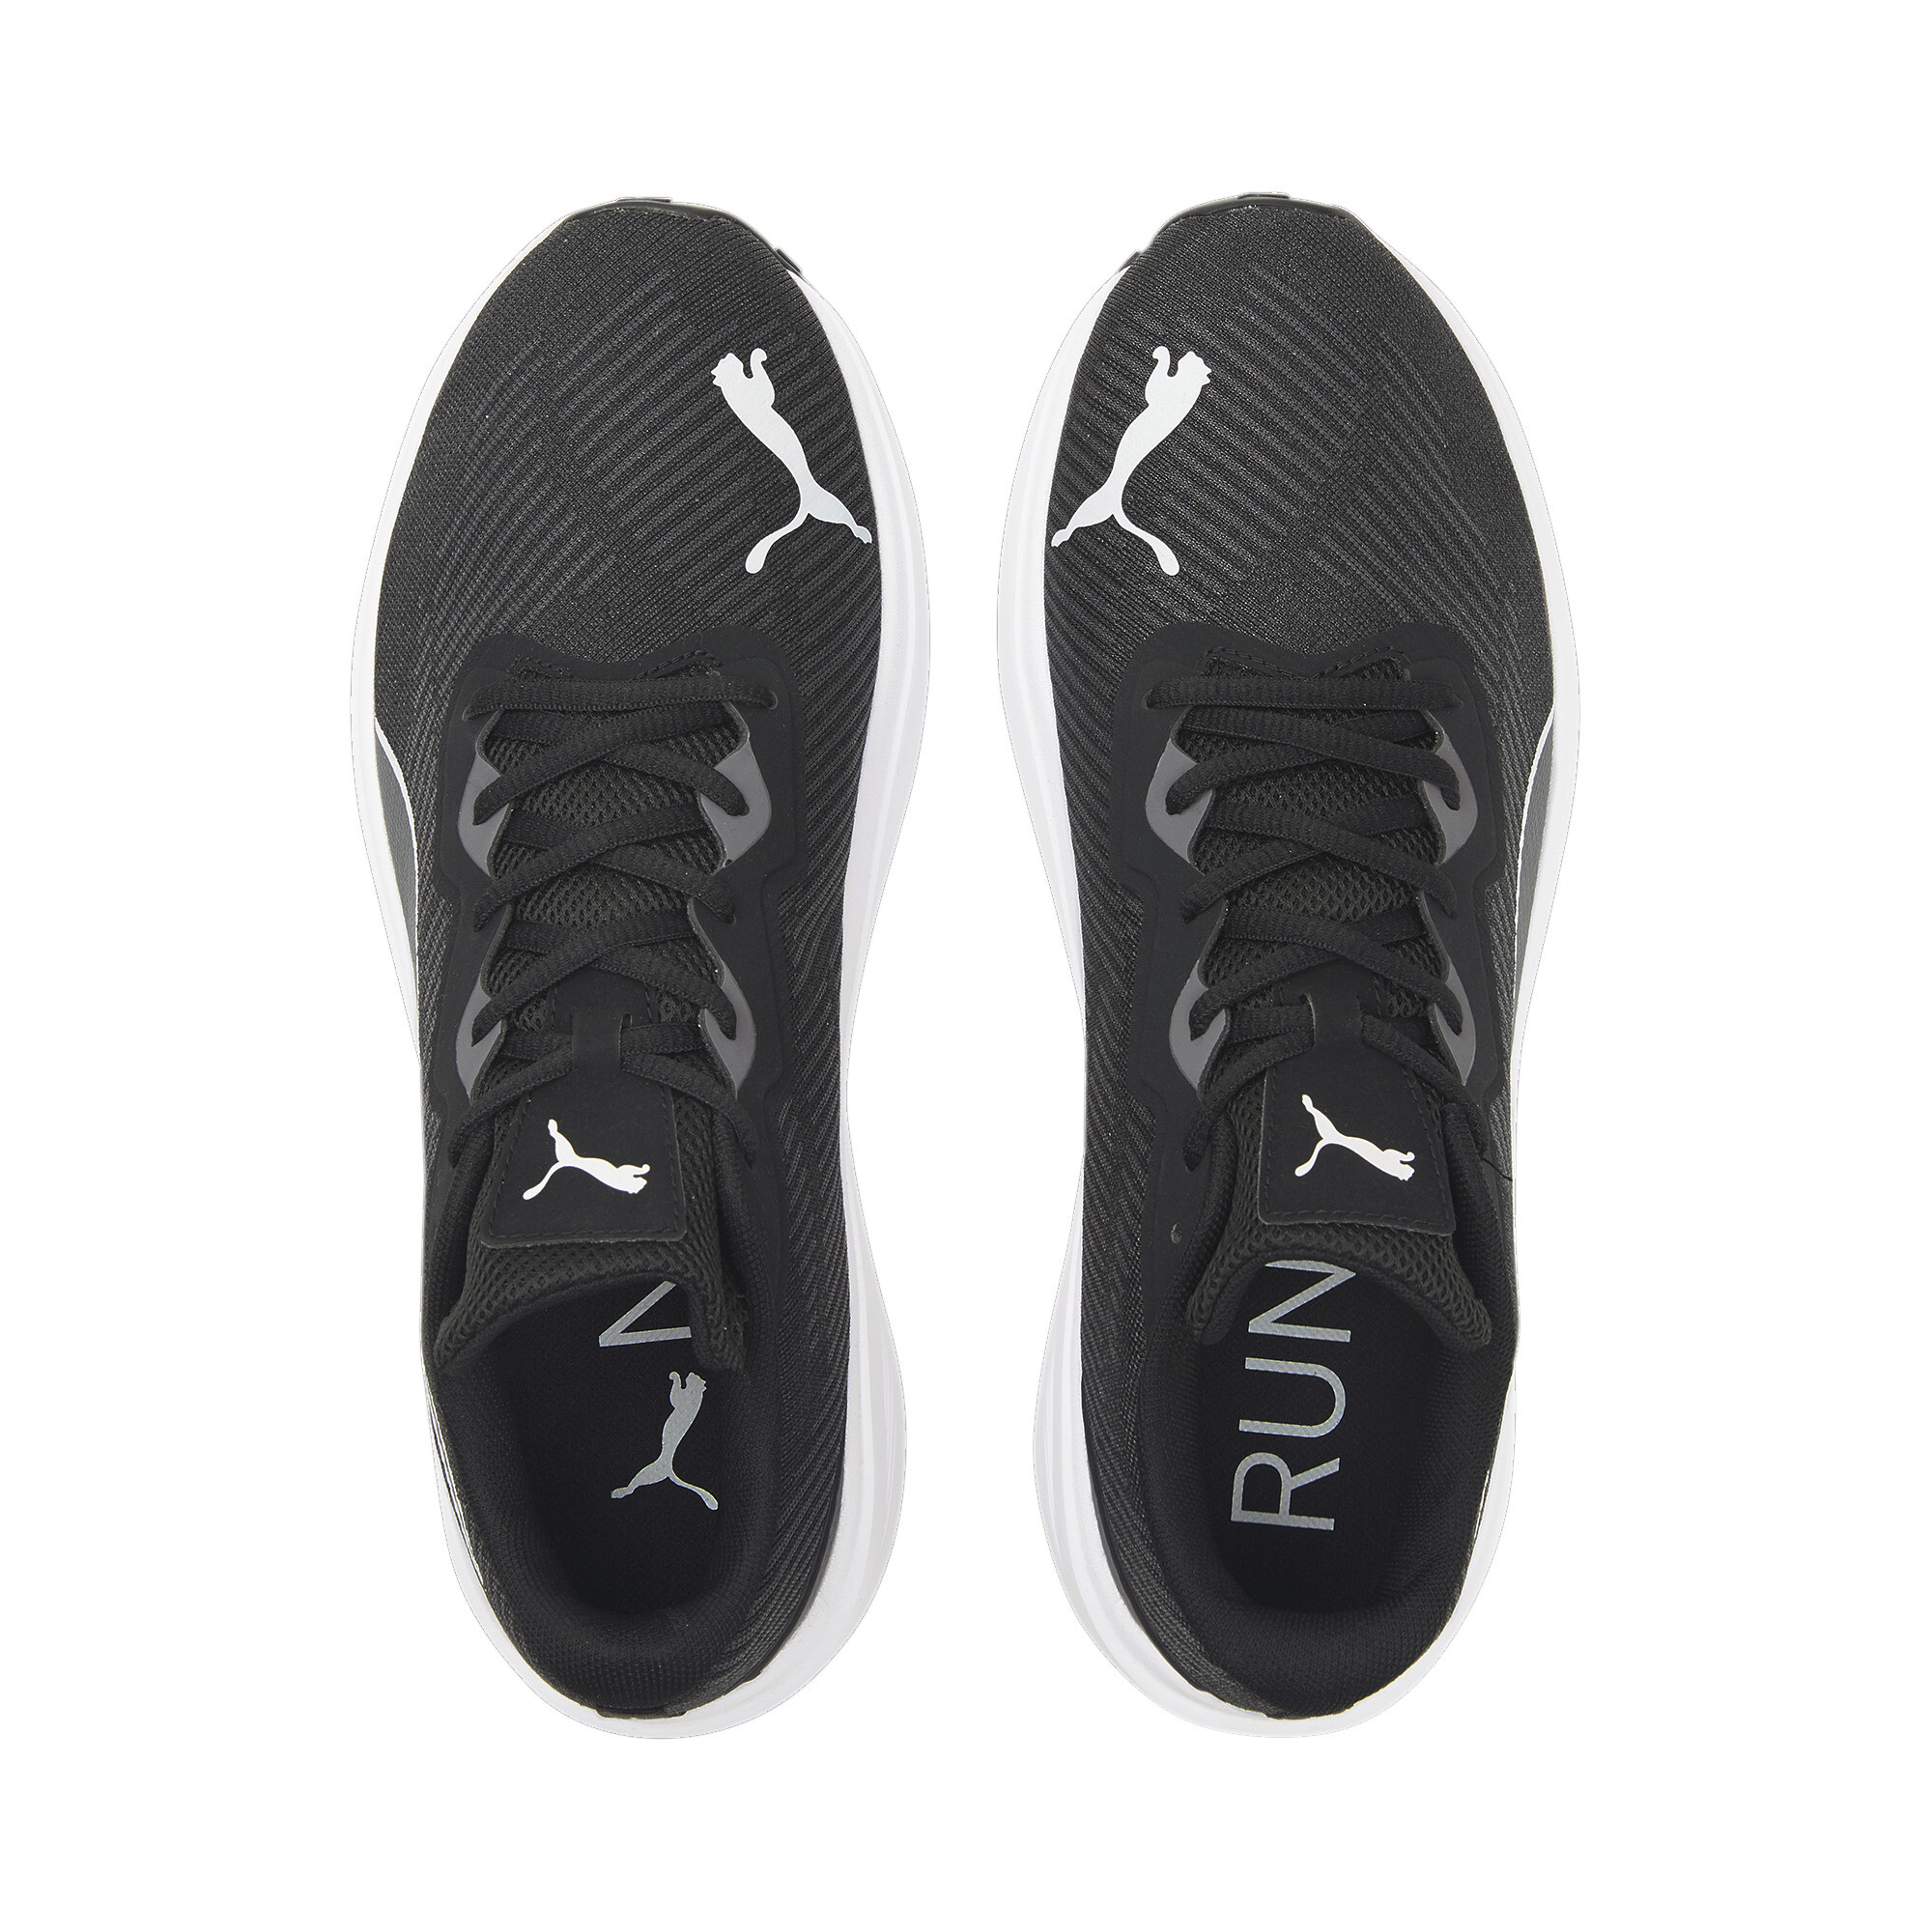 PUMA Men's Aviator ProFoam Sky Running Shoes | eBay